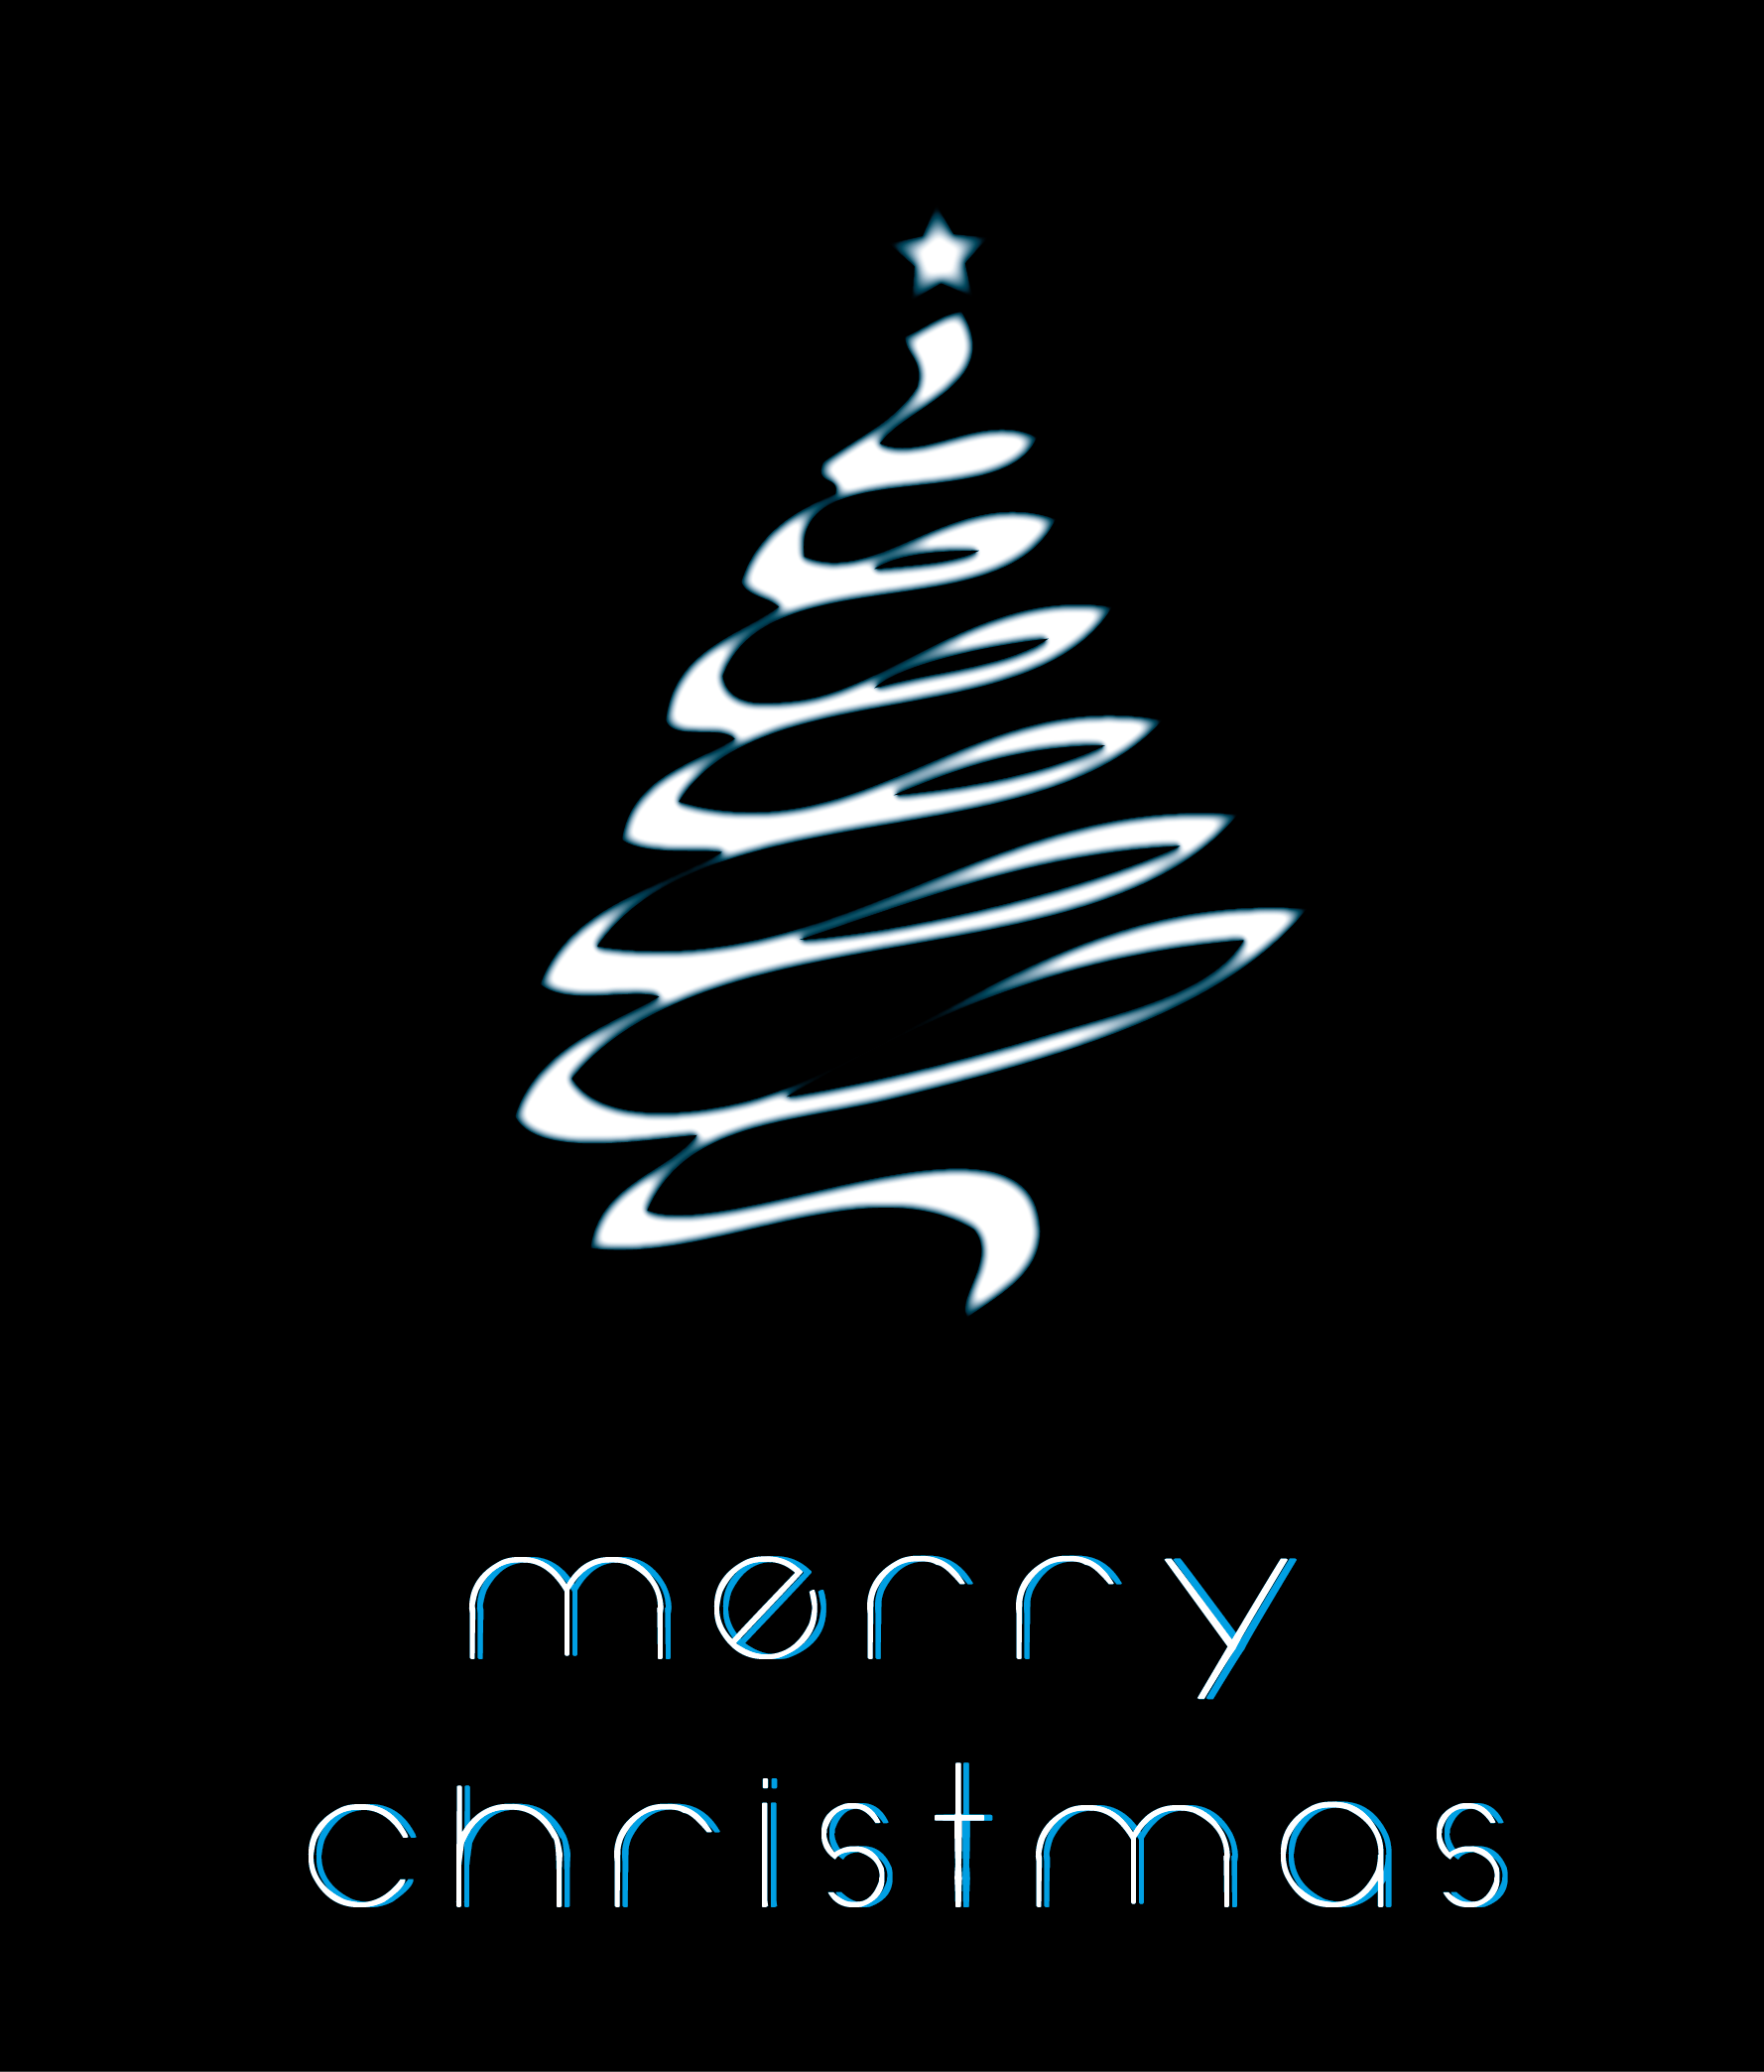 Christmas Card Design 2 - Christmas Tree by RGunX on DeviantArt